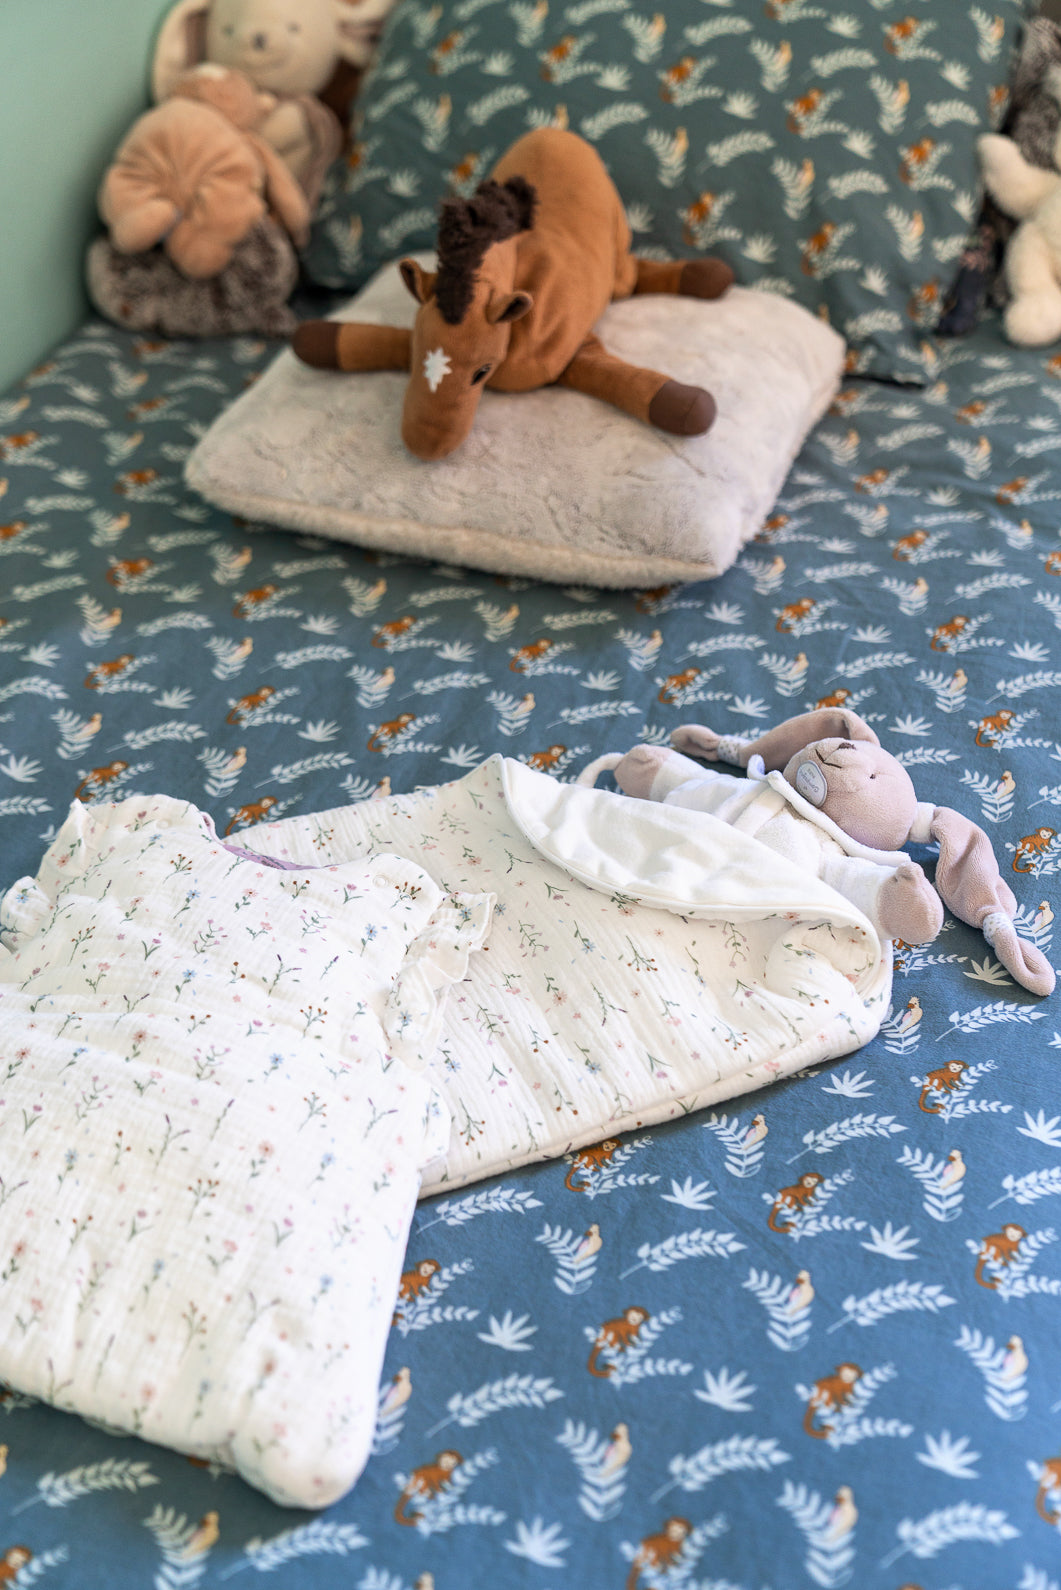 Range pyjama : peluche range pyjama pour bébé